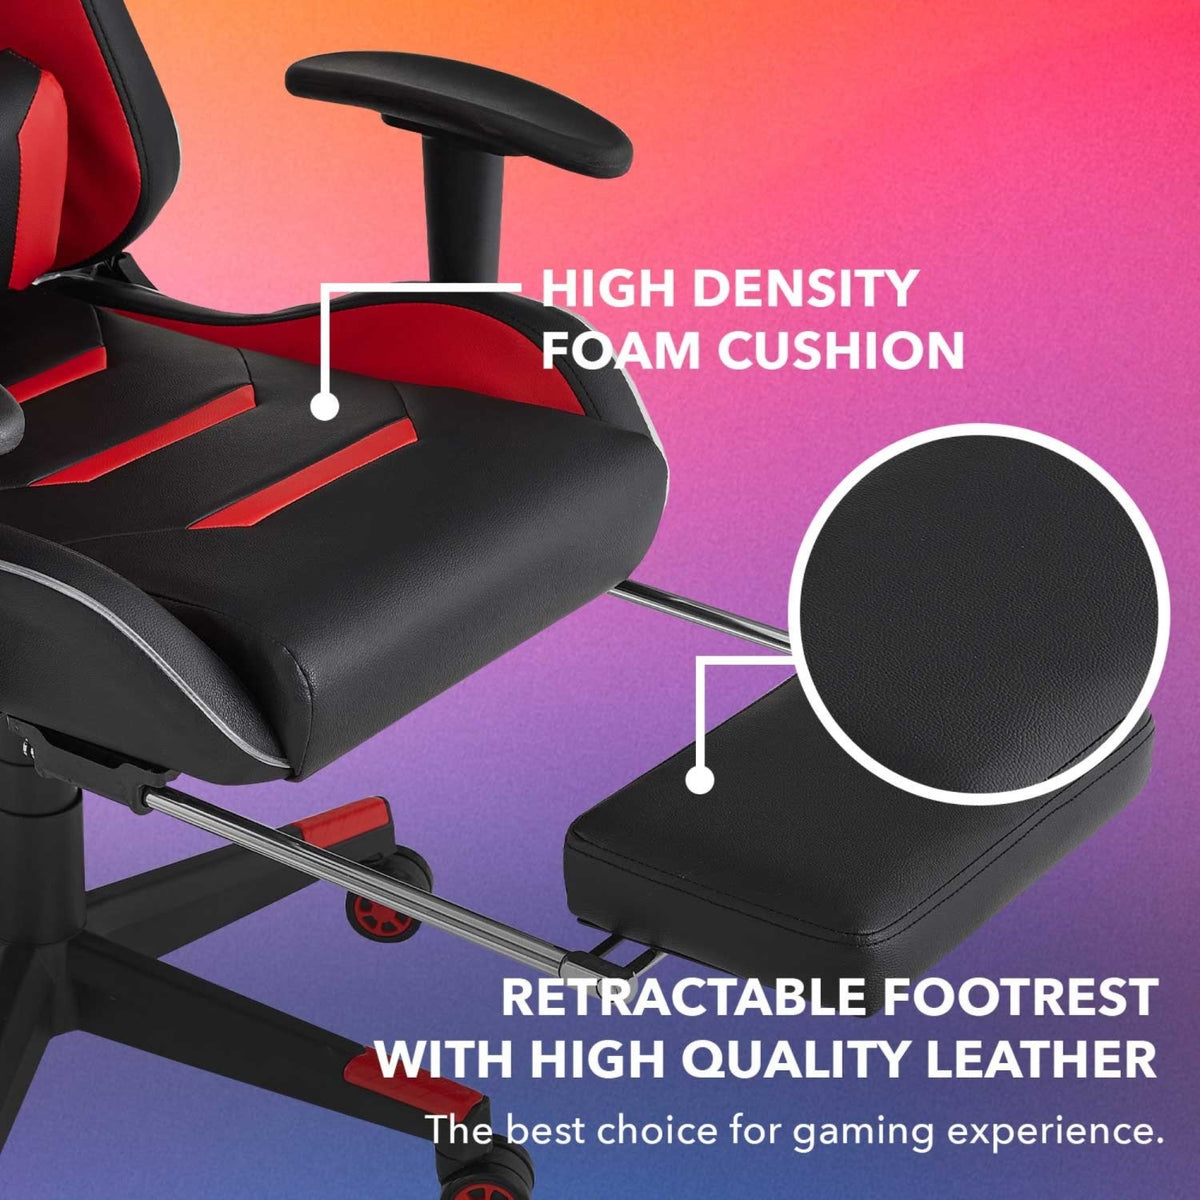 Nala Swivel, Adjustable Back Angle, Seat Height and Armrest Game Chair